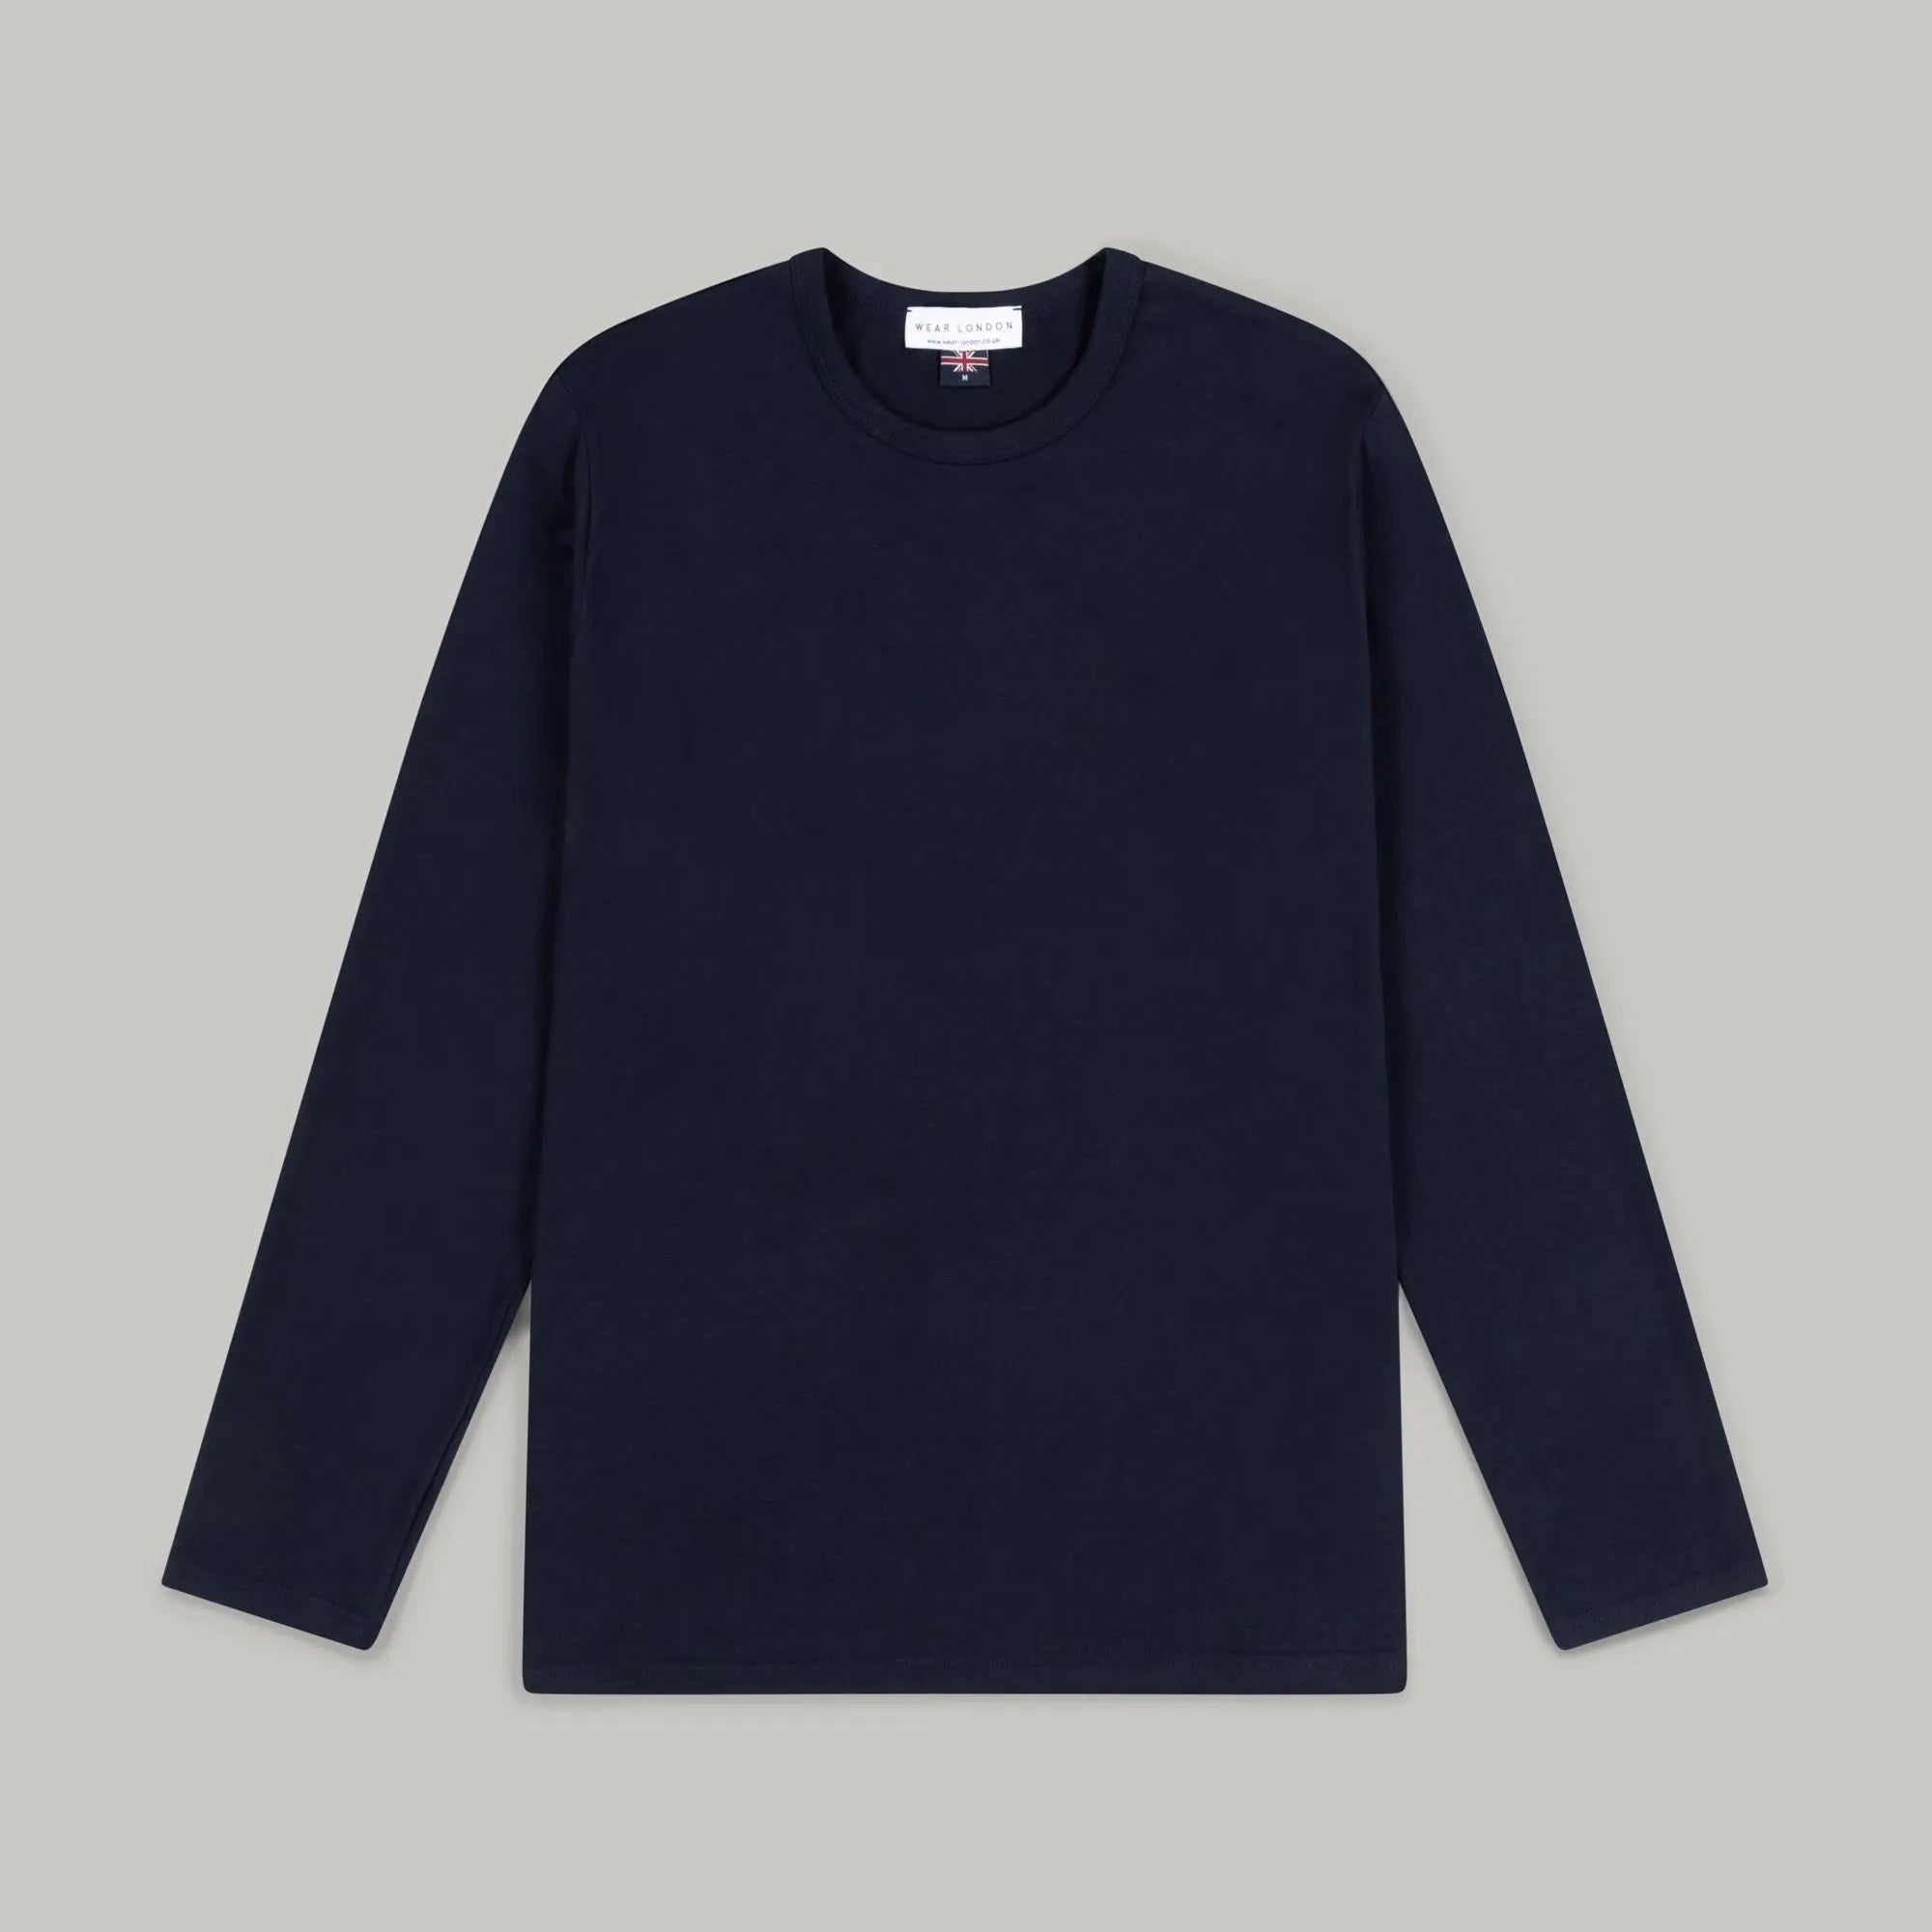 Bevis Long Sleeve t-shirt - Navy - Wear London